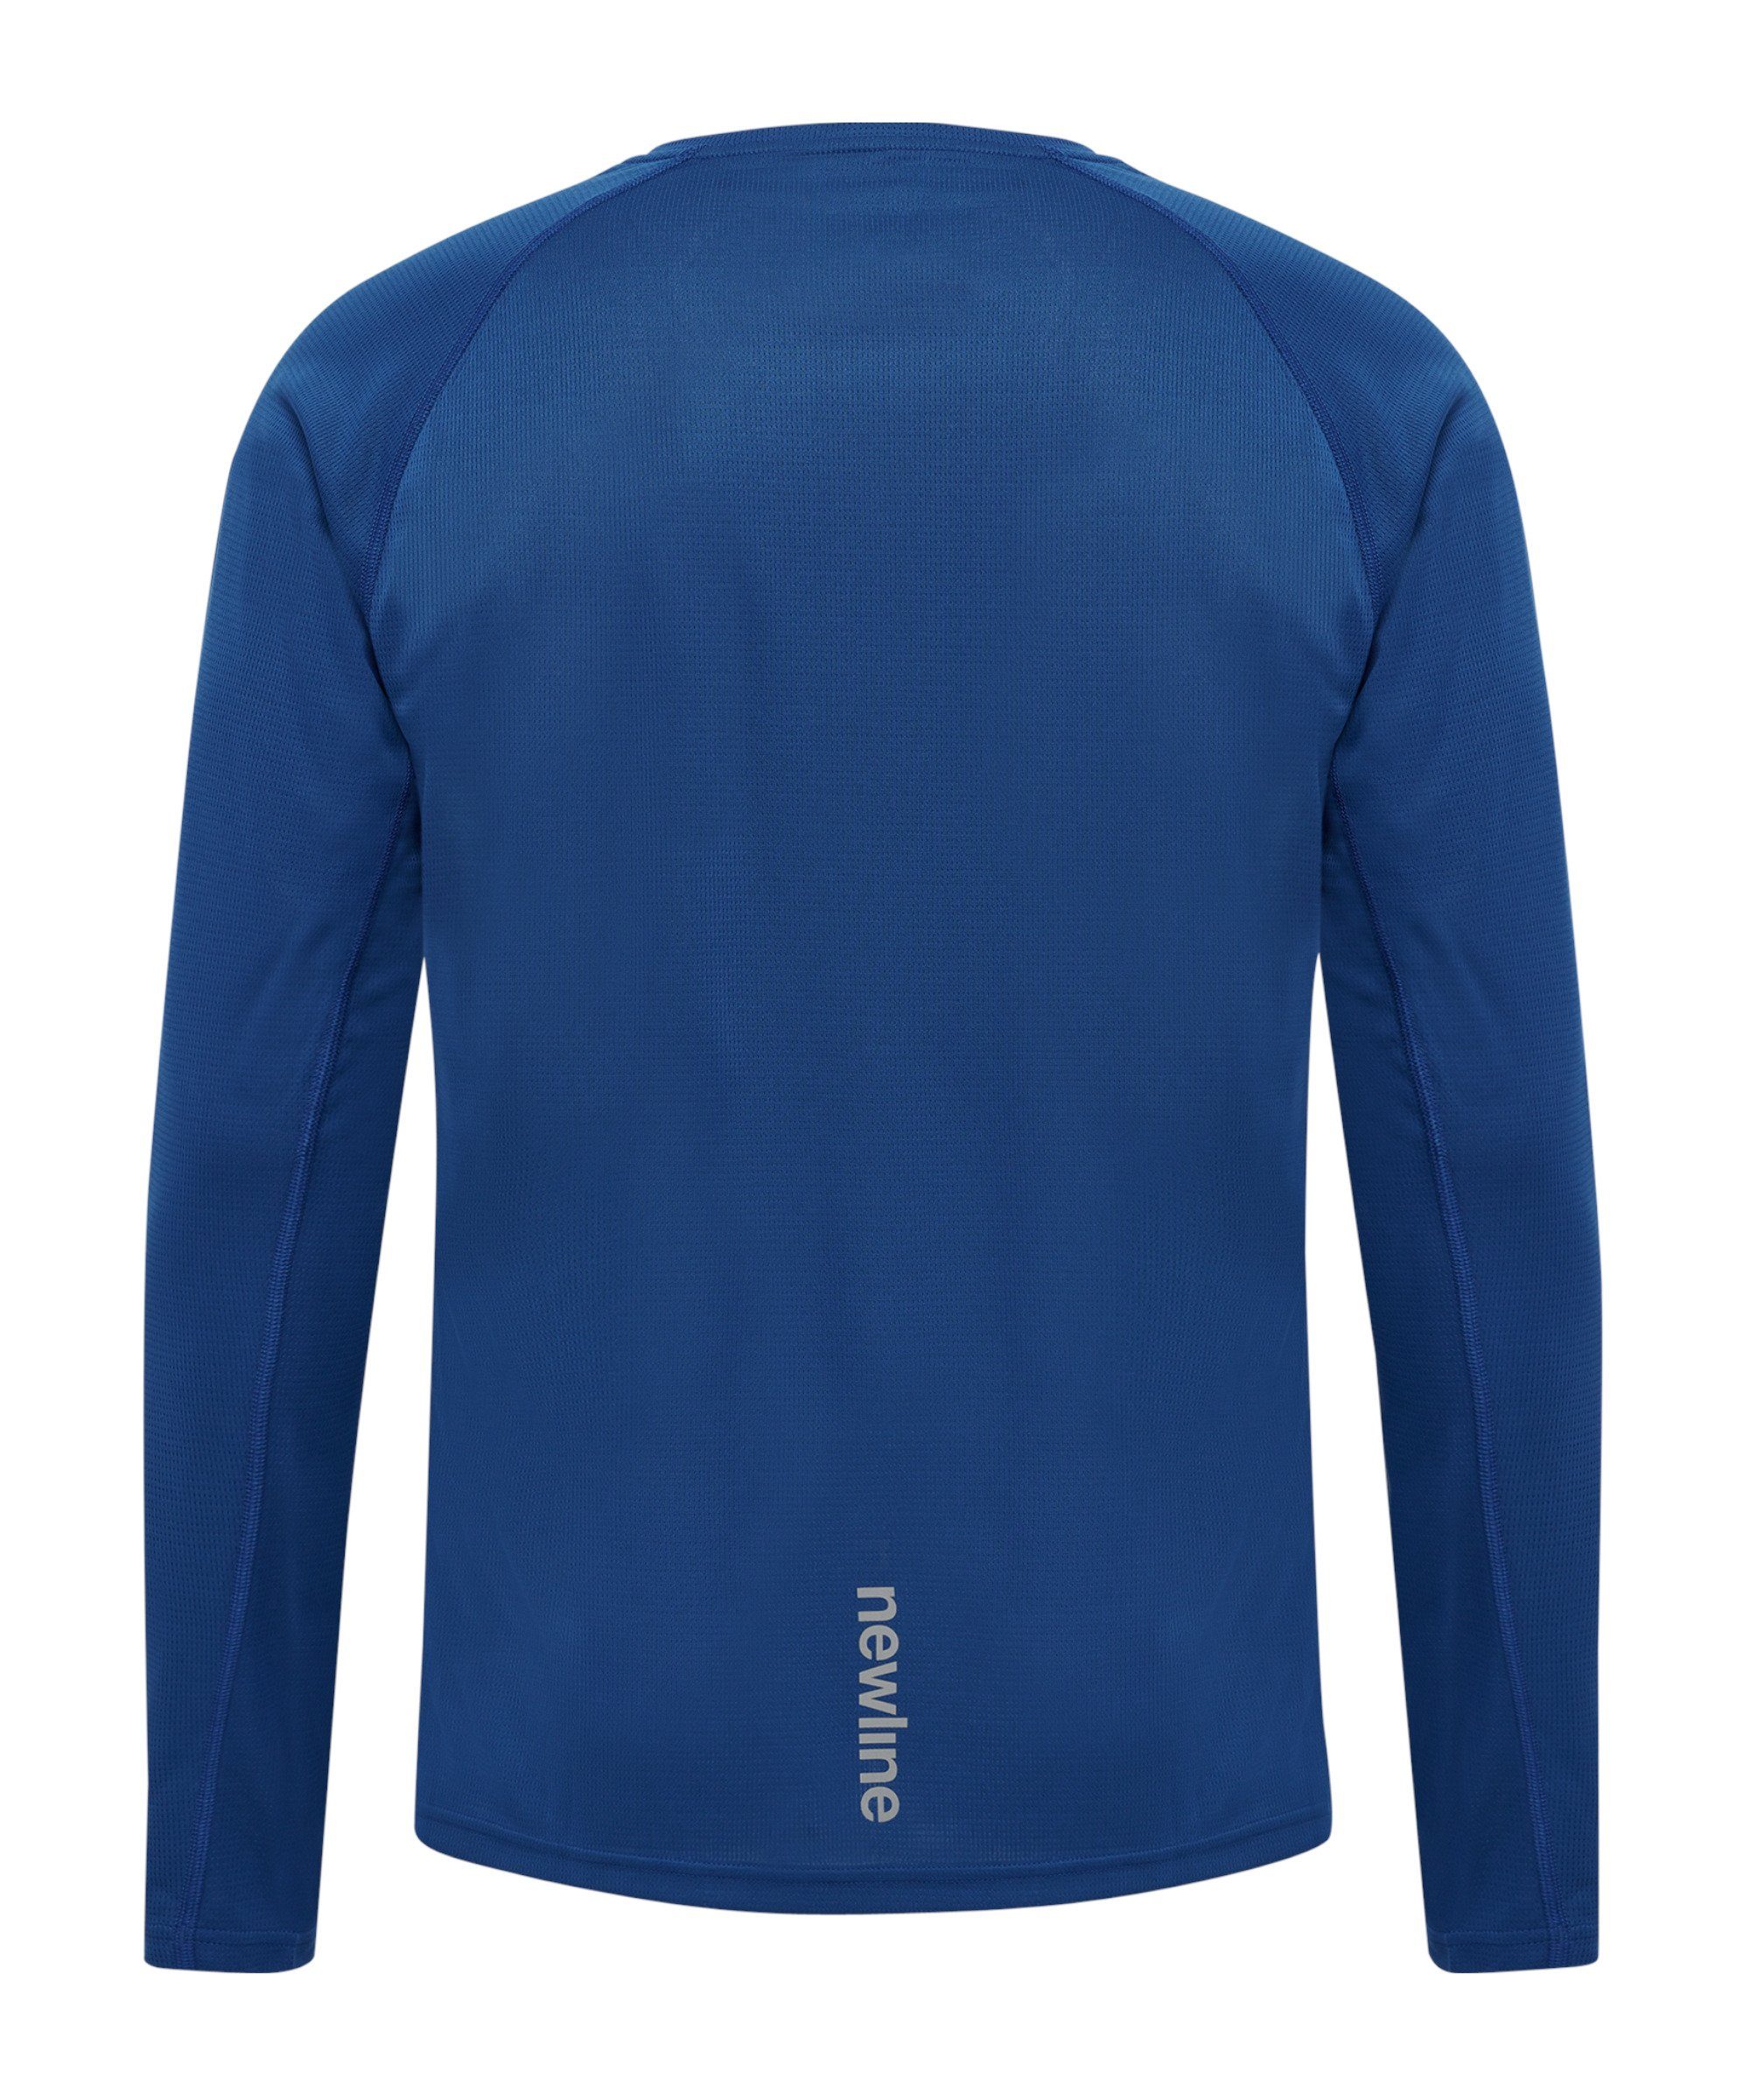 Running NewLine default langarm Core T-Shirt Shirt blau